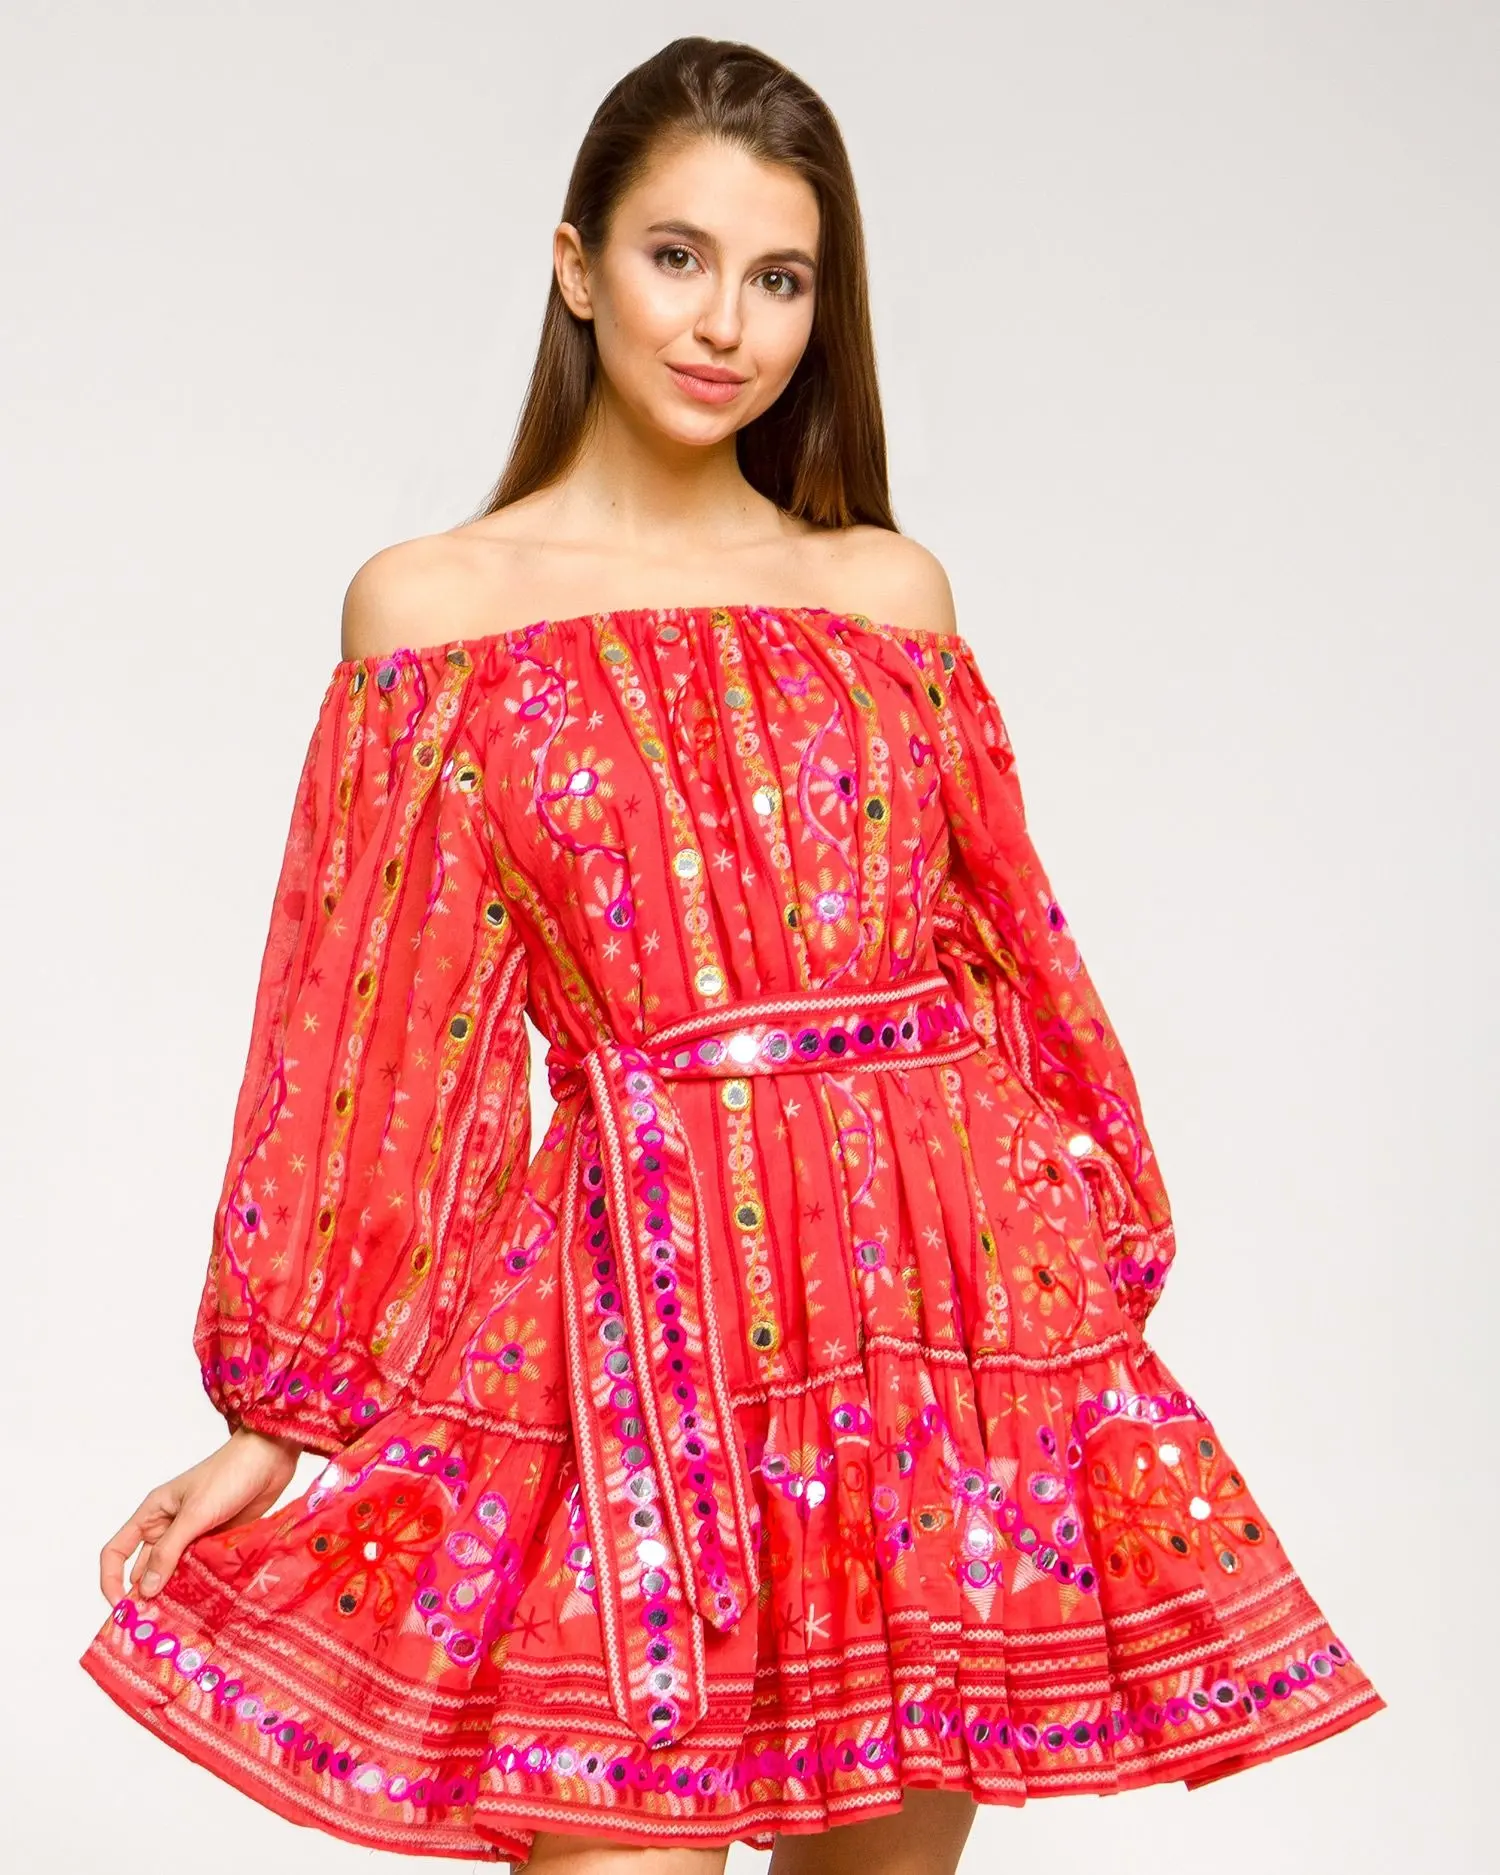 Spanish Neckline Trendy Girls Boho Style Decorated Embroidery & Big Sequin Mini Dress Summer Hot Red Bottom Flounce Women Tunic